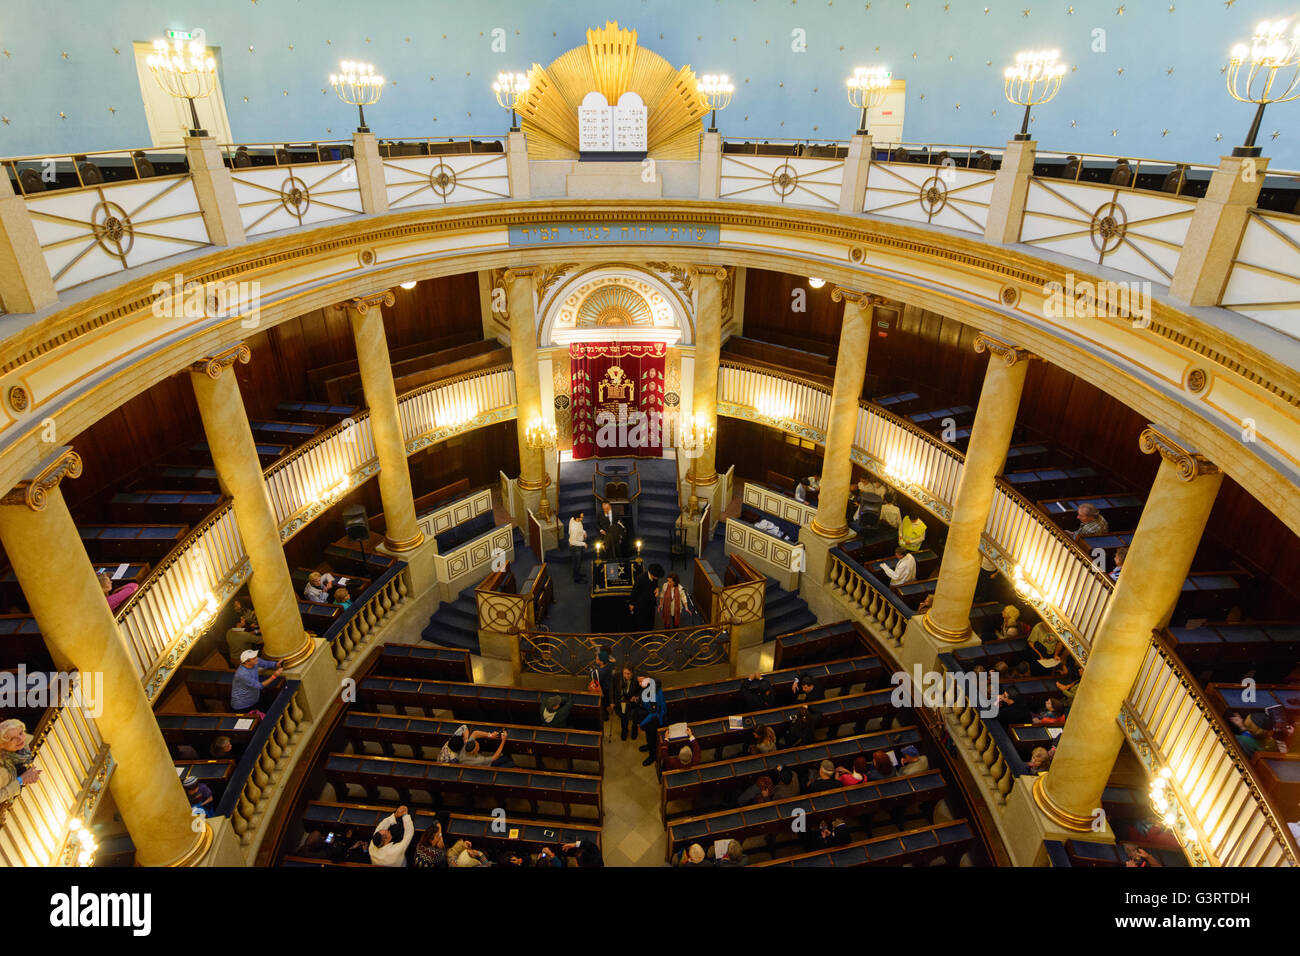 City Temple ( main synagogue ) on open day, Austria, Wien, 01., Wien, Vienna Stock Photo